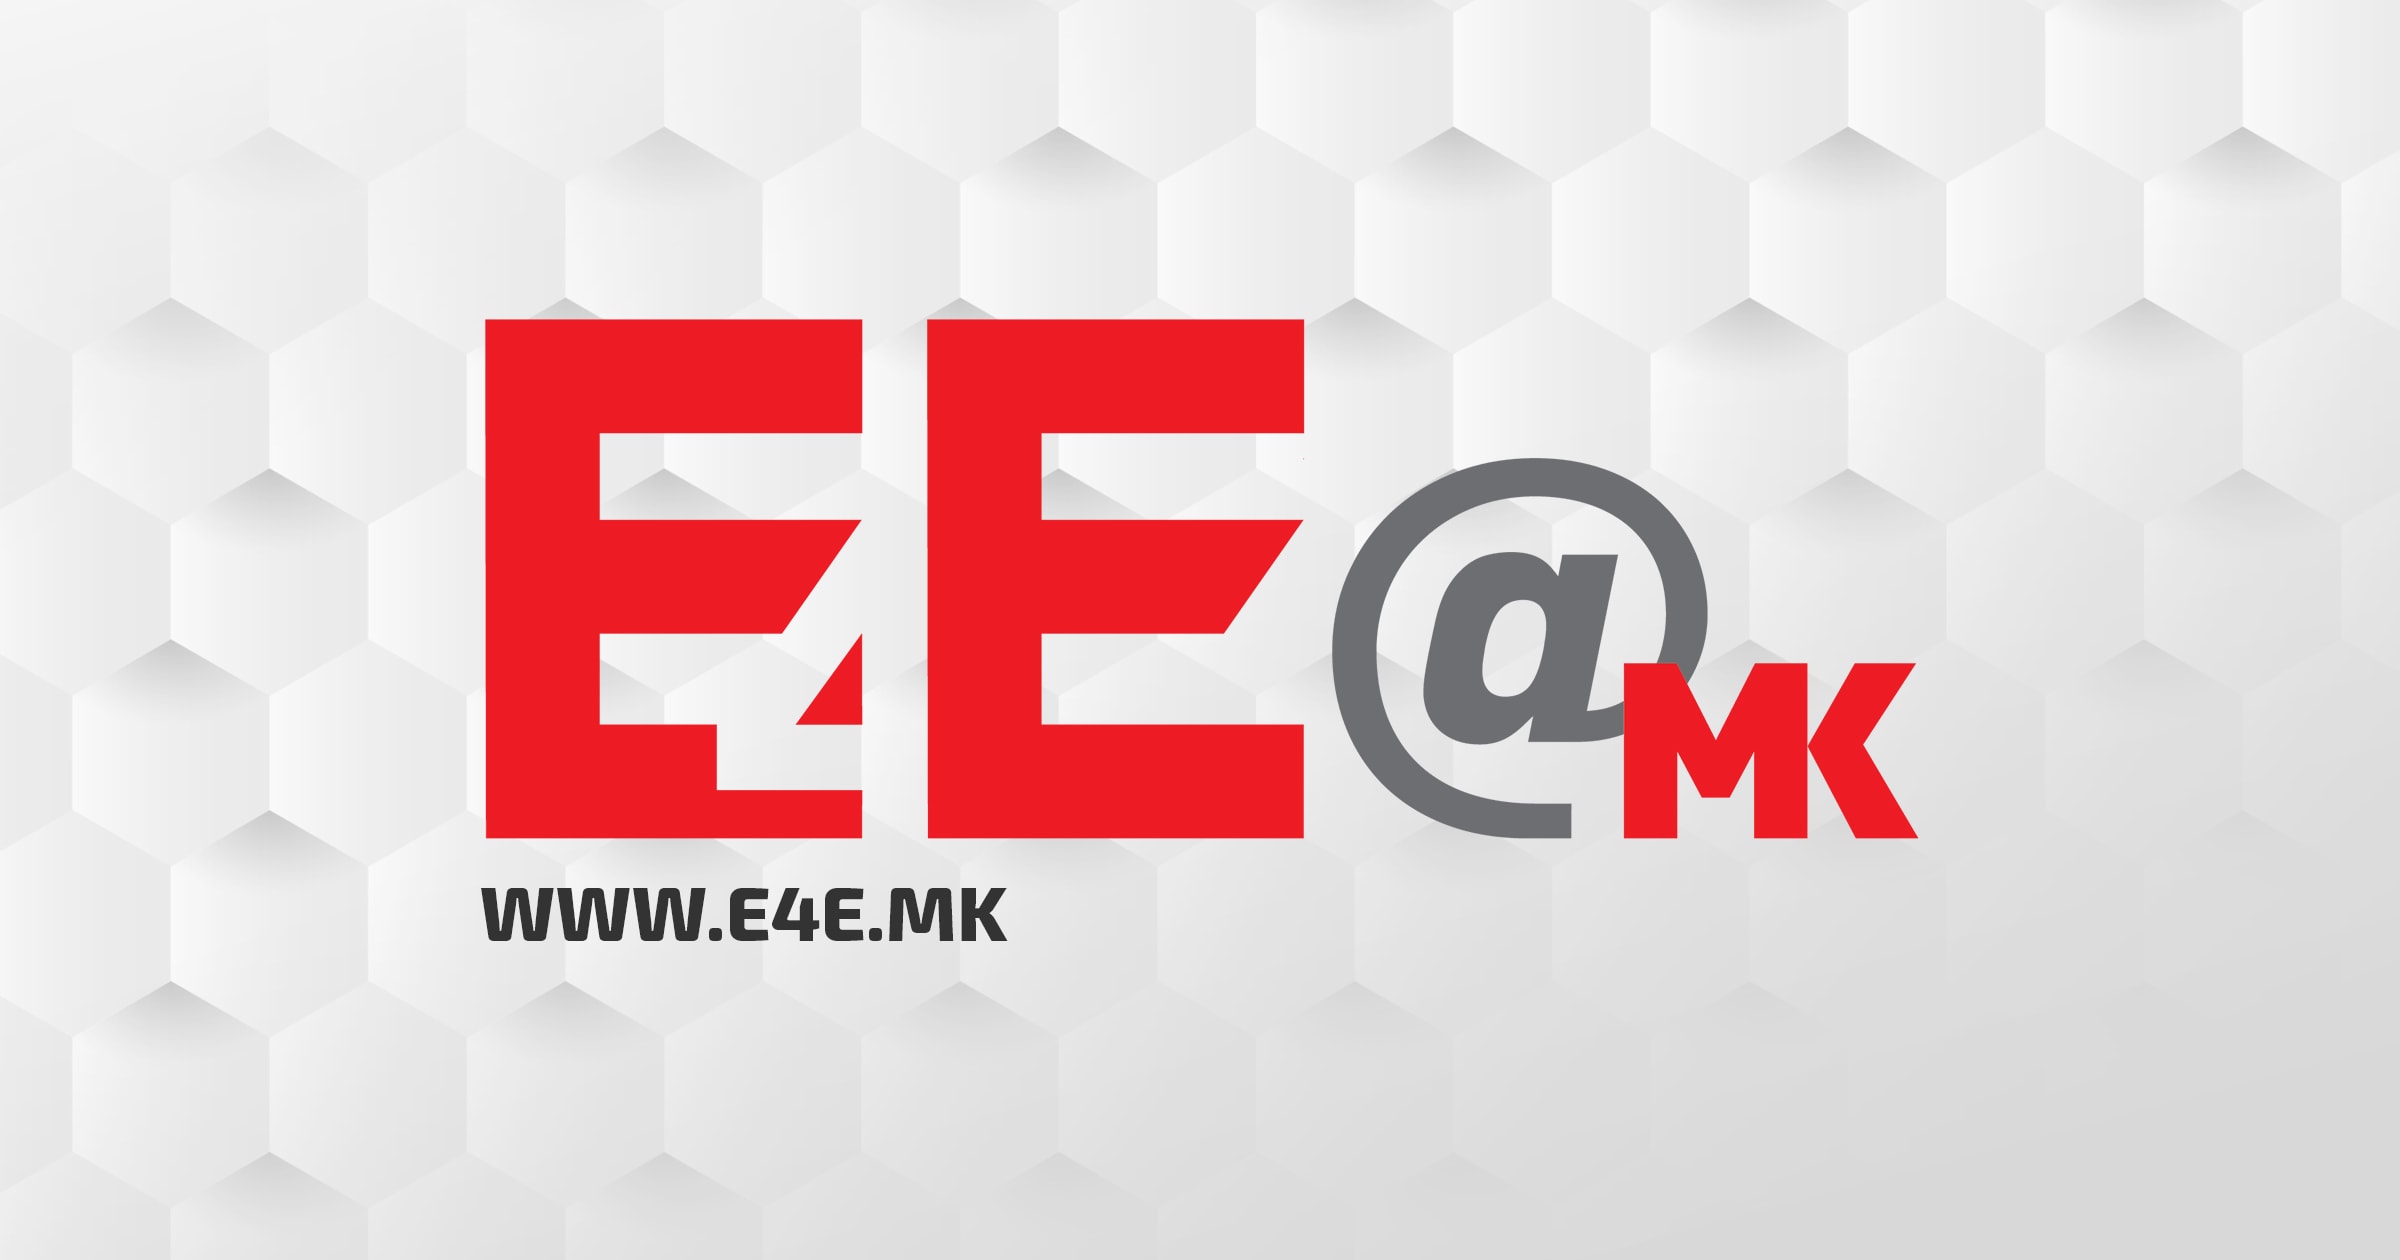 E4E@mk (première phase du projet)